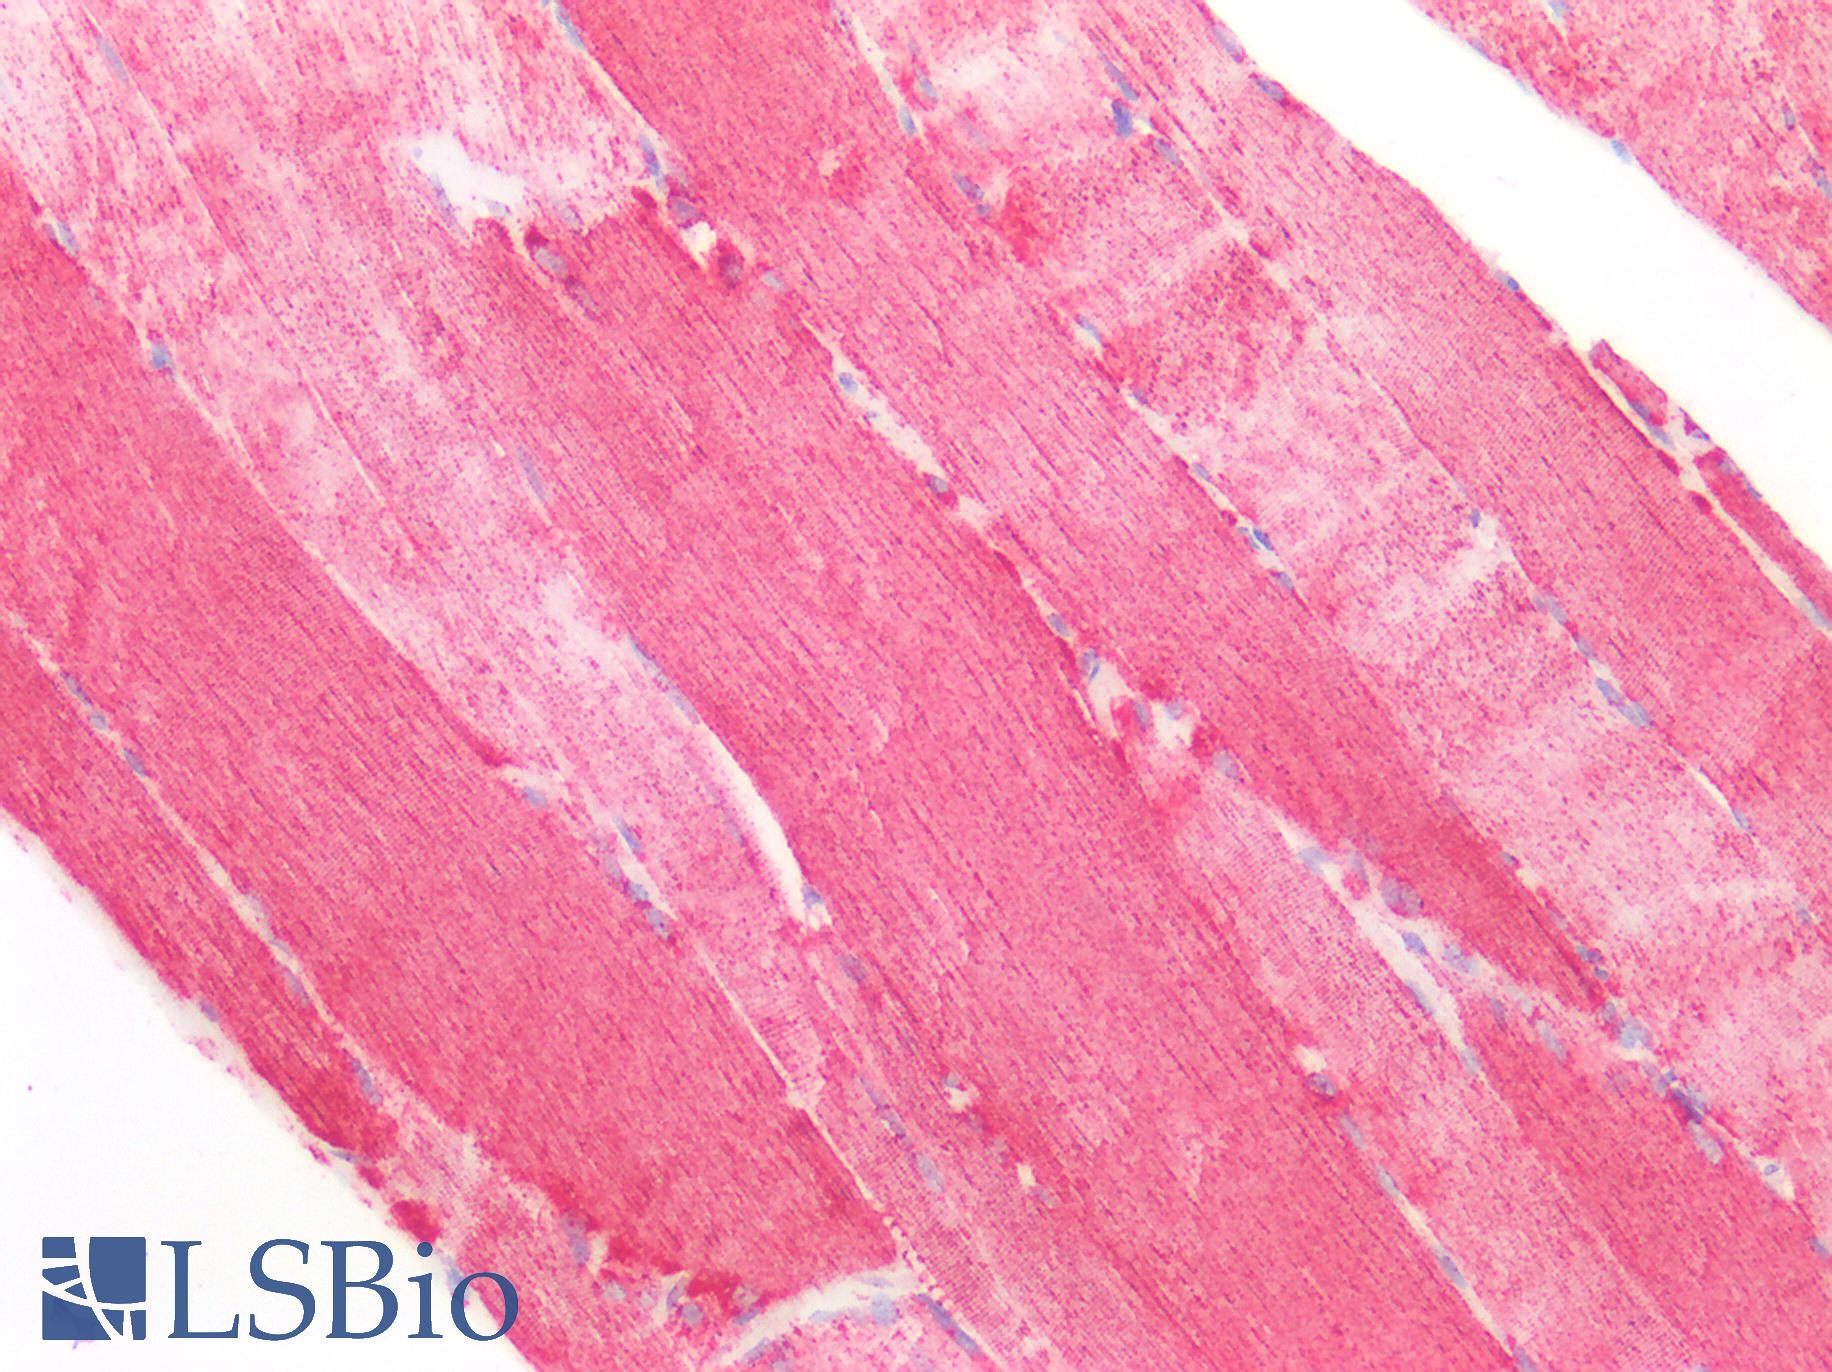 SOD2 / Mn SOD Antibody - Human Skeletal Muscle: Formalin-Fixed, Paraffin-Embedded (FFPE)